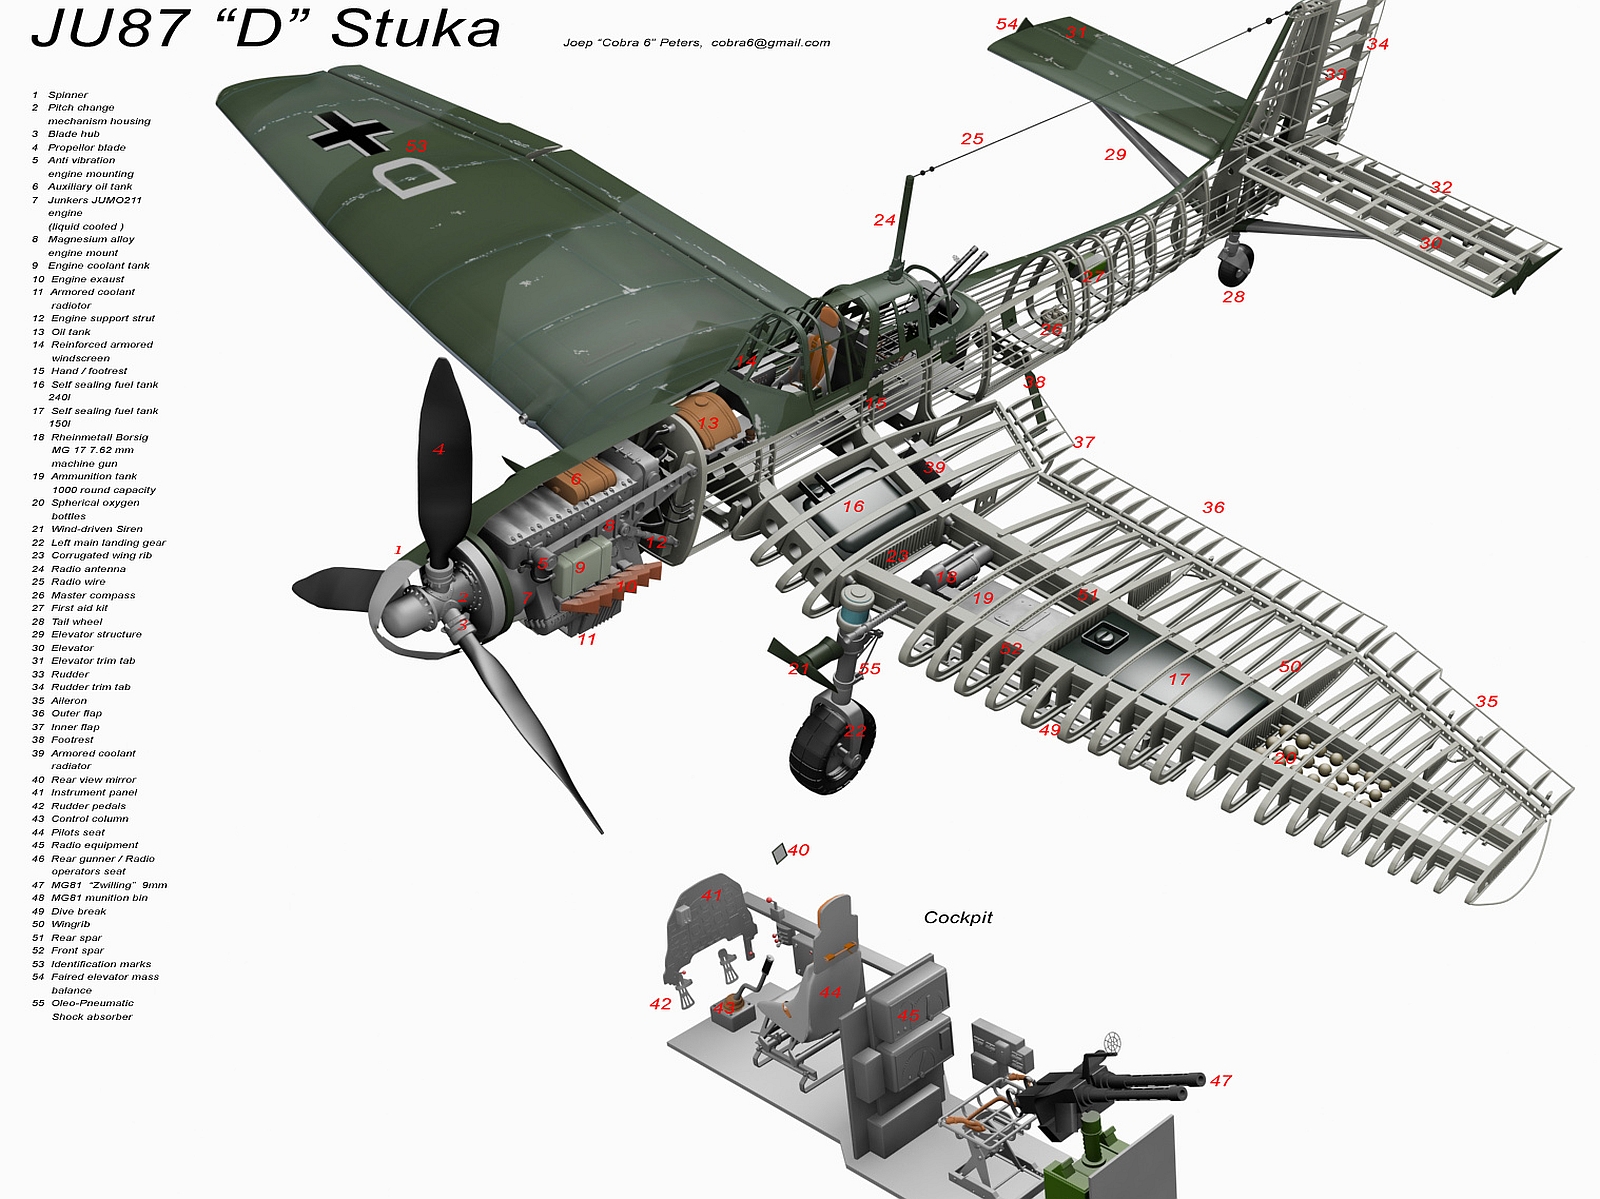 Military Junkers Ju 87 HD Wallpaper | Background Image